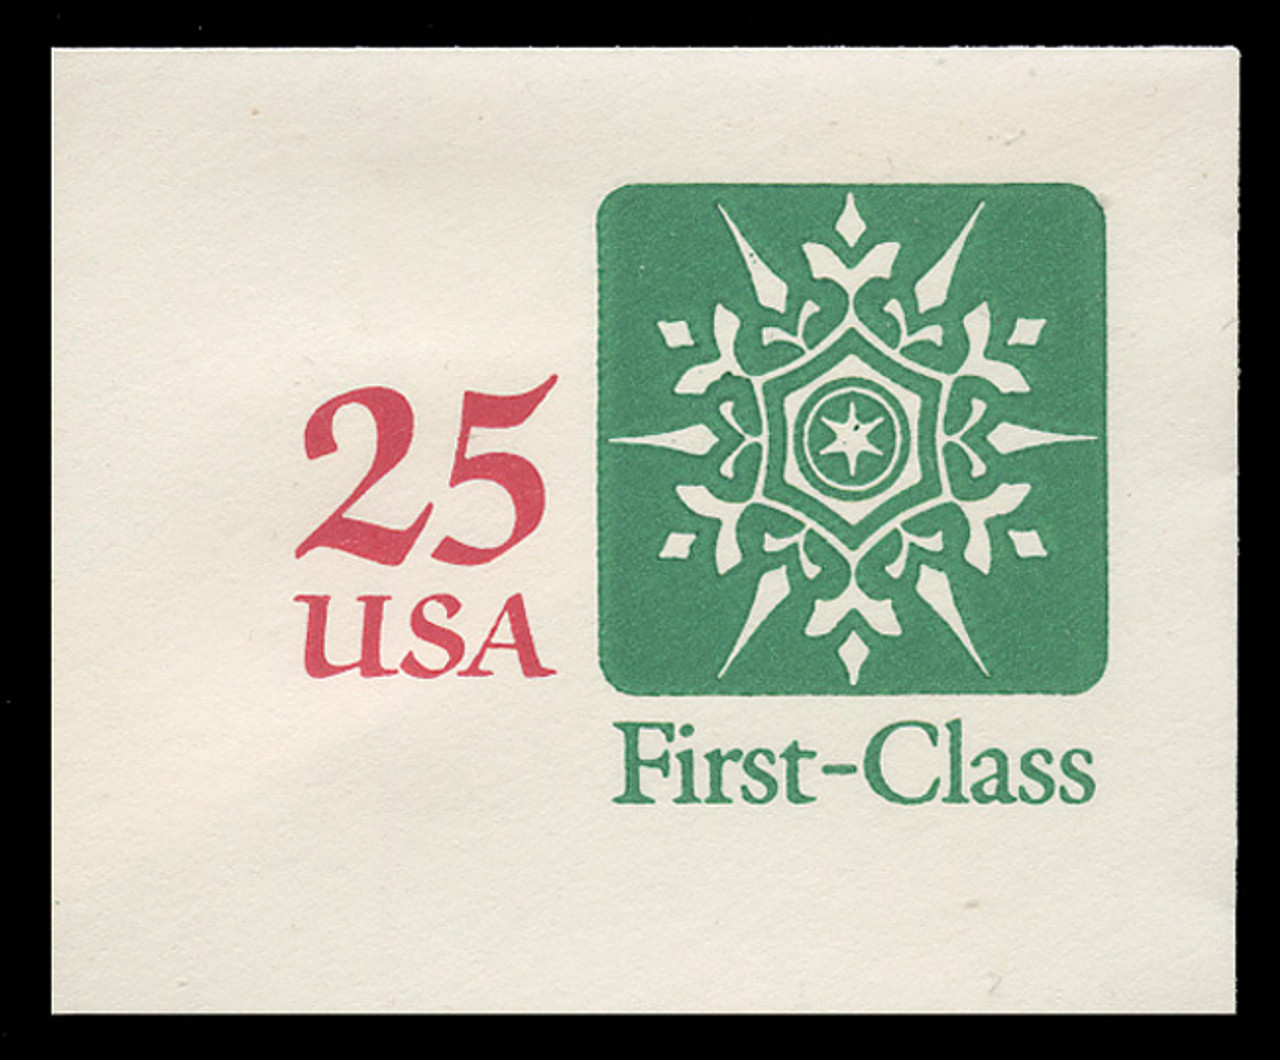 U.S. Scott # U 613 1988 25c Christmas - Snowflake - Mint Full Corner